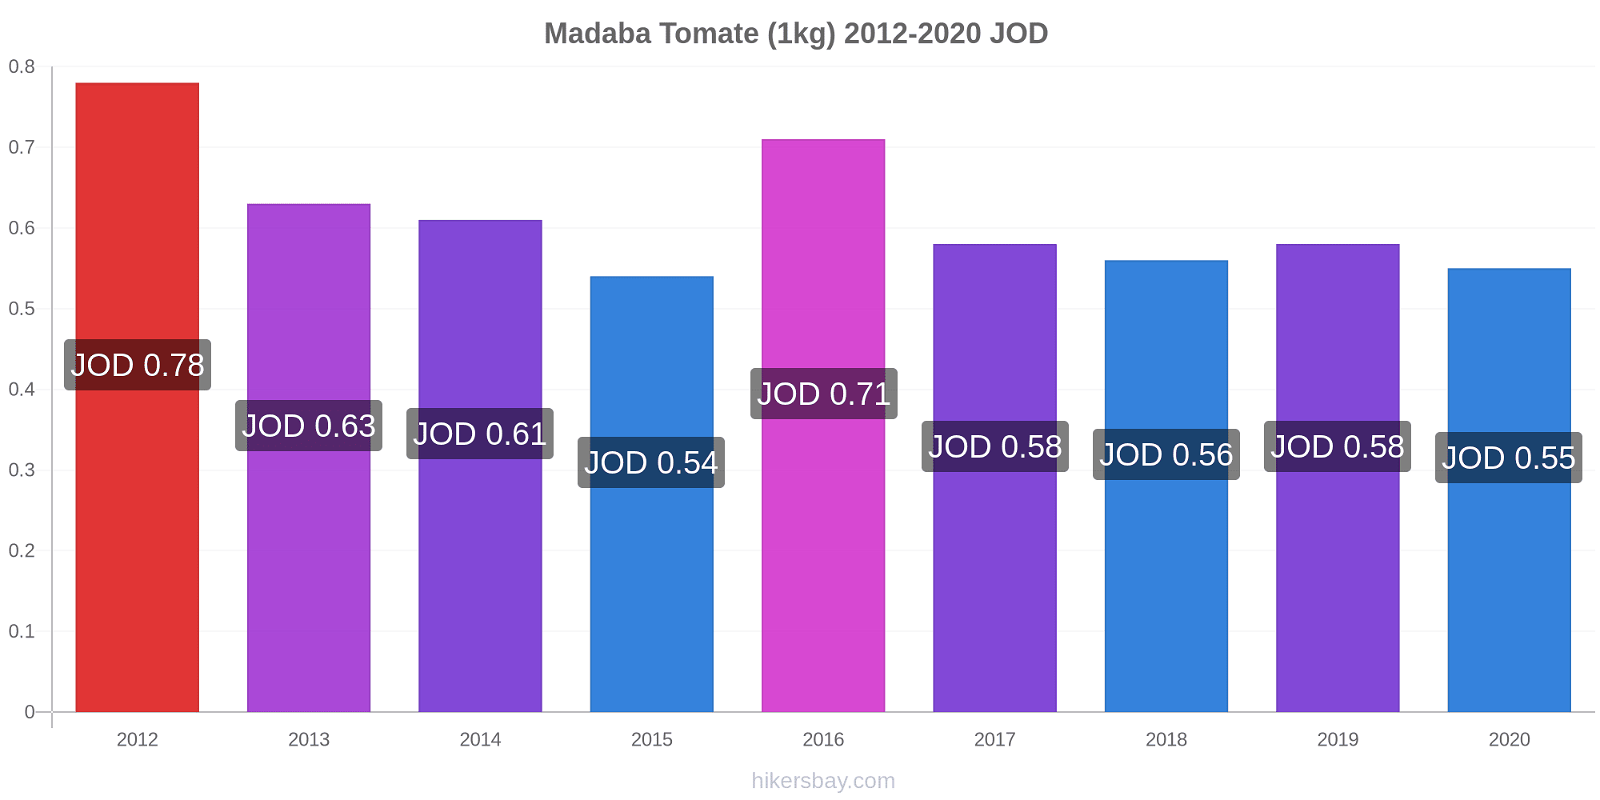 Madaba changements de prix Tomate (1kg) hikersbay.com